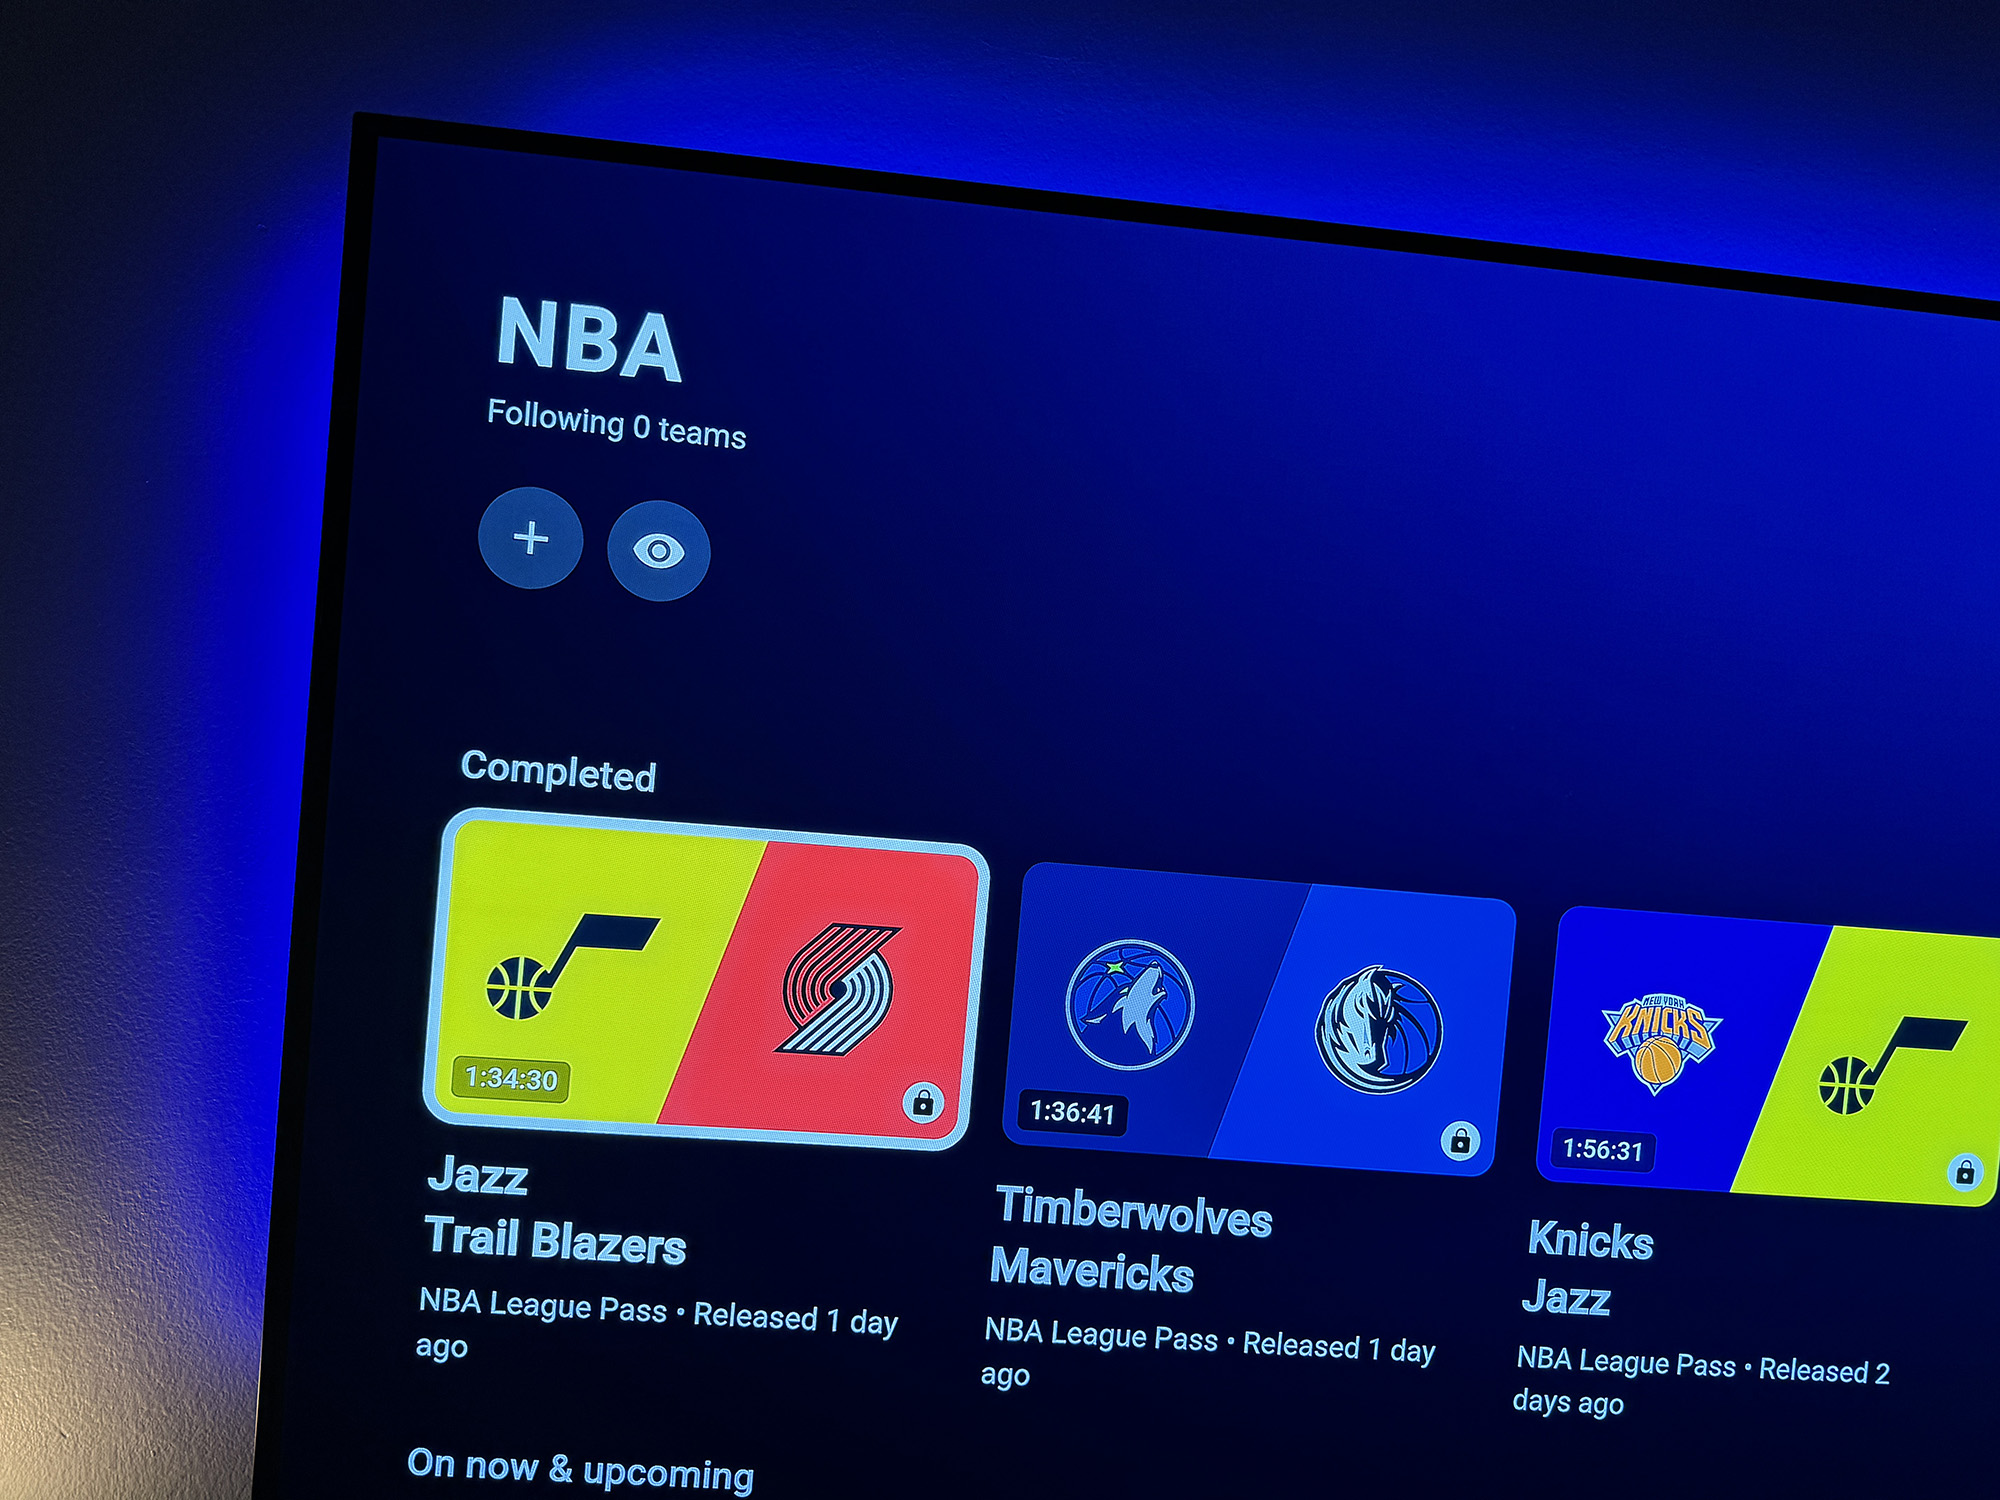 NBA League Pass on Prime Video Channels